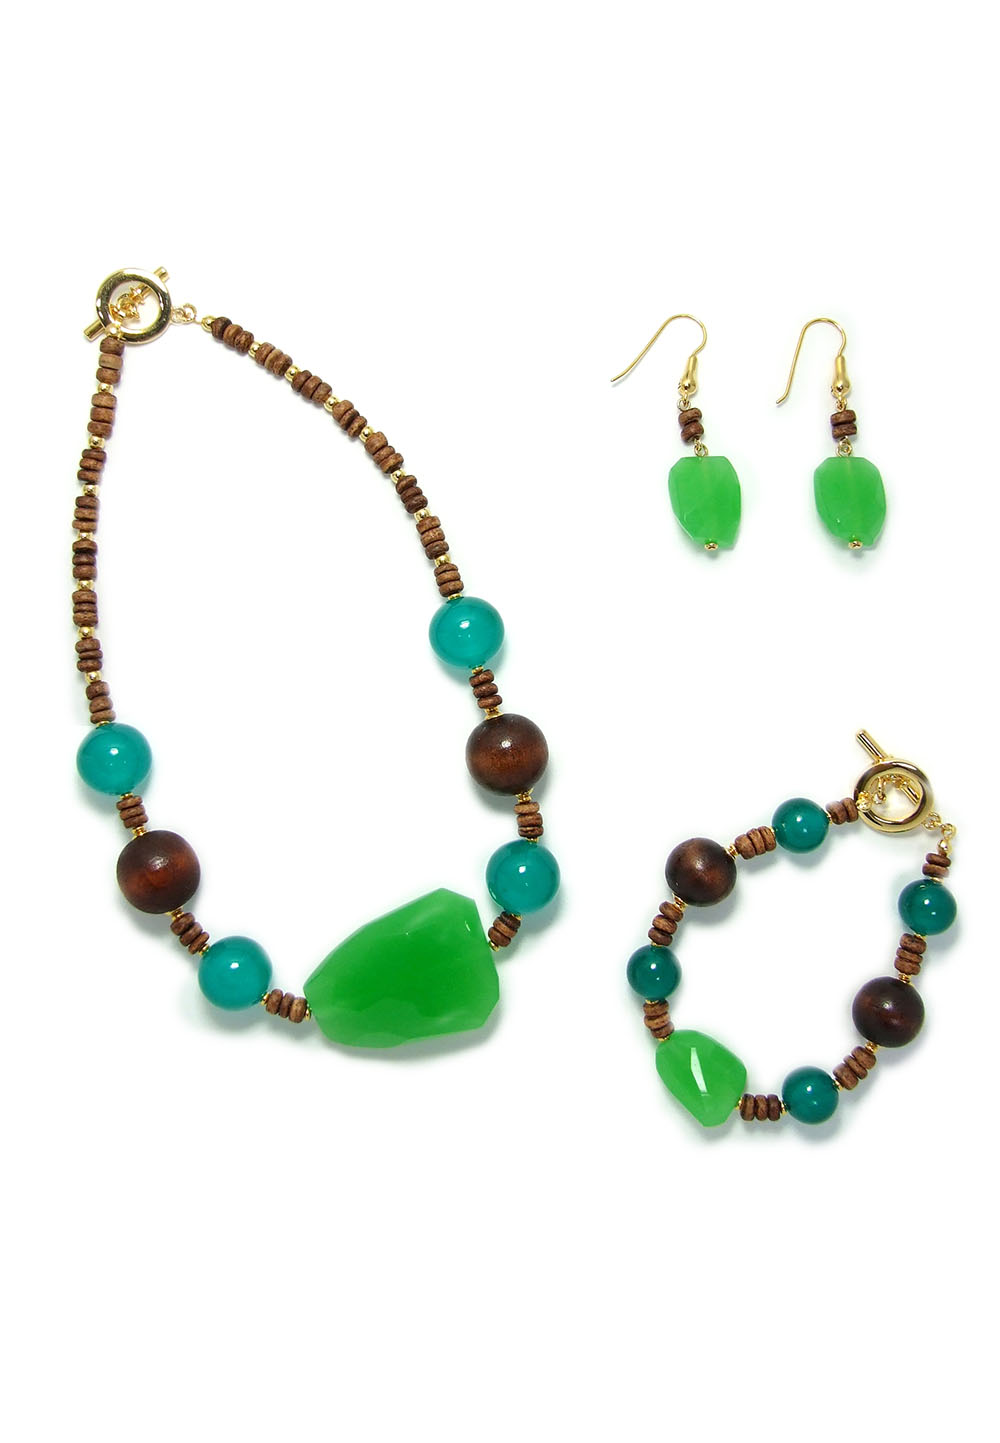 Green Malachite jewelry manufacturer